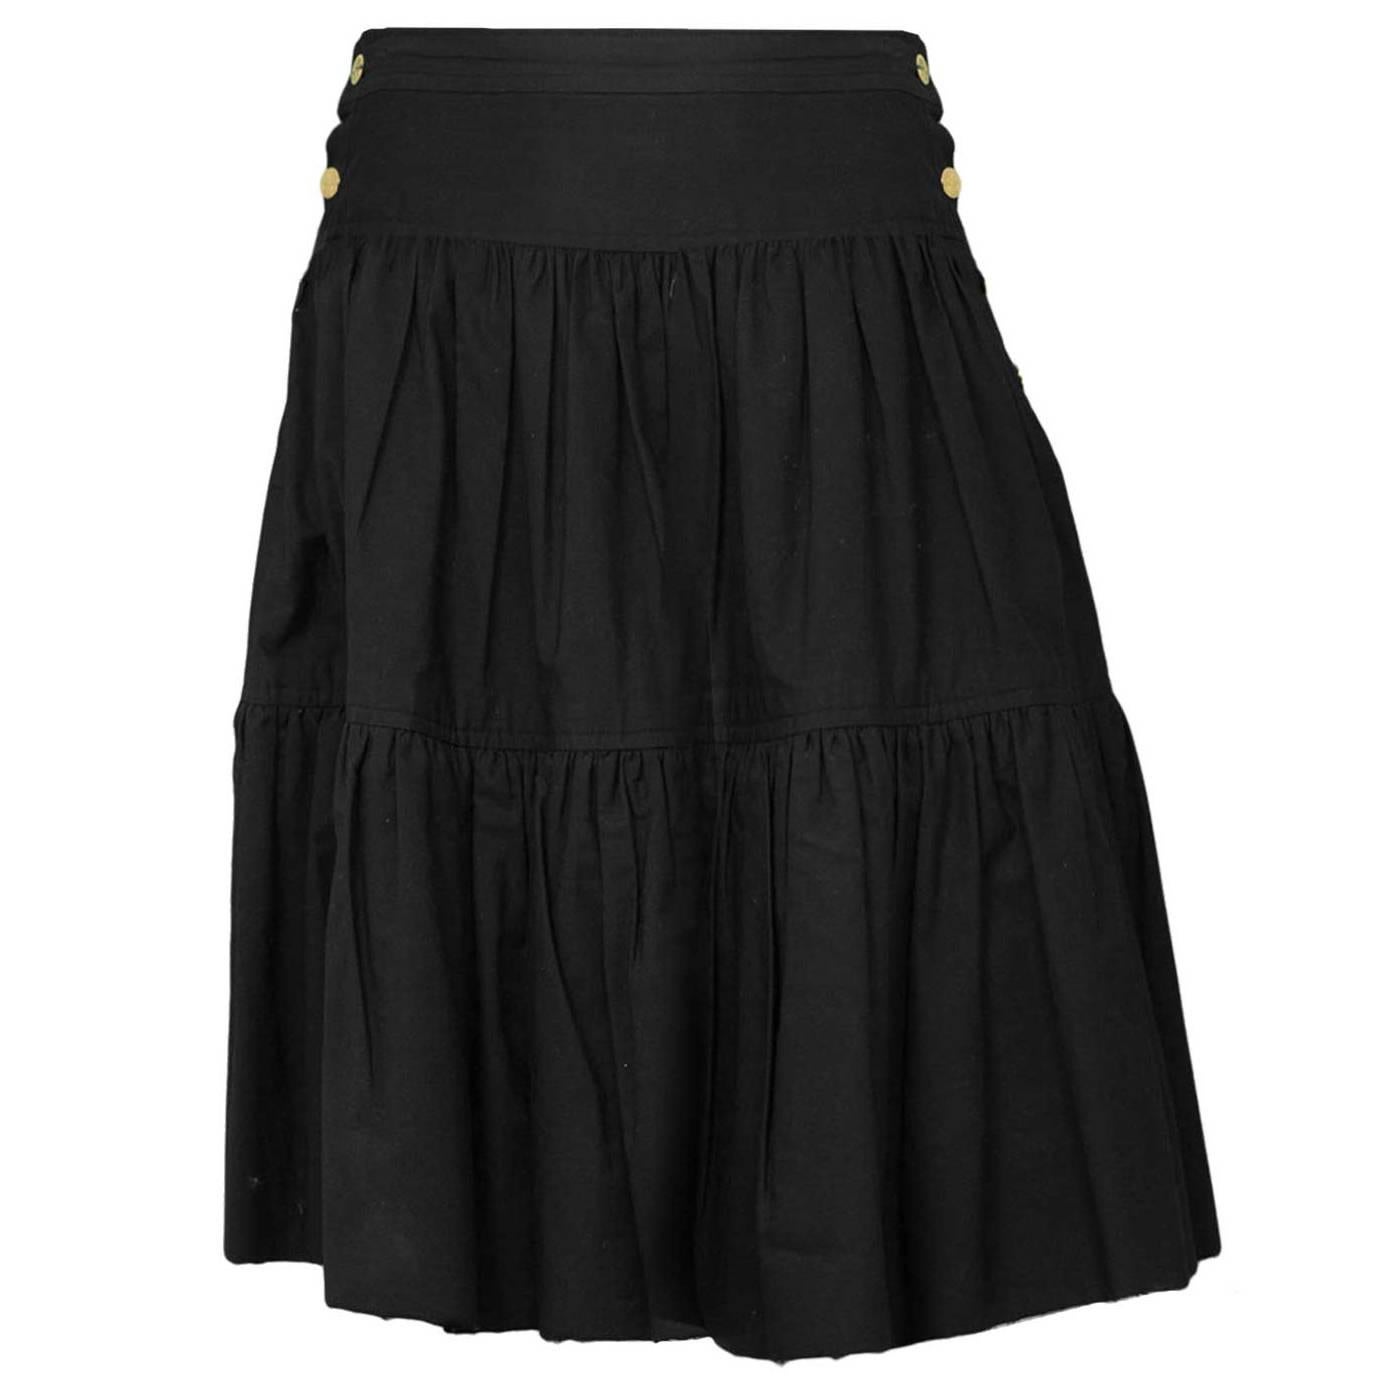 Chanel Black Cotton 2-Tier Skirt sz M